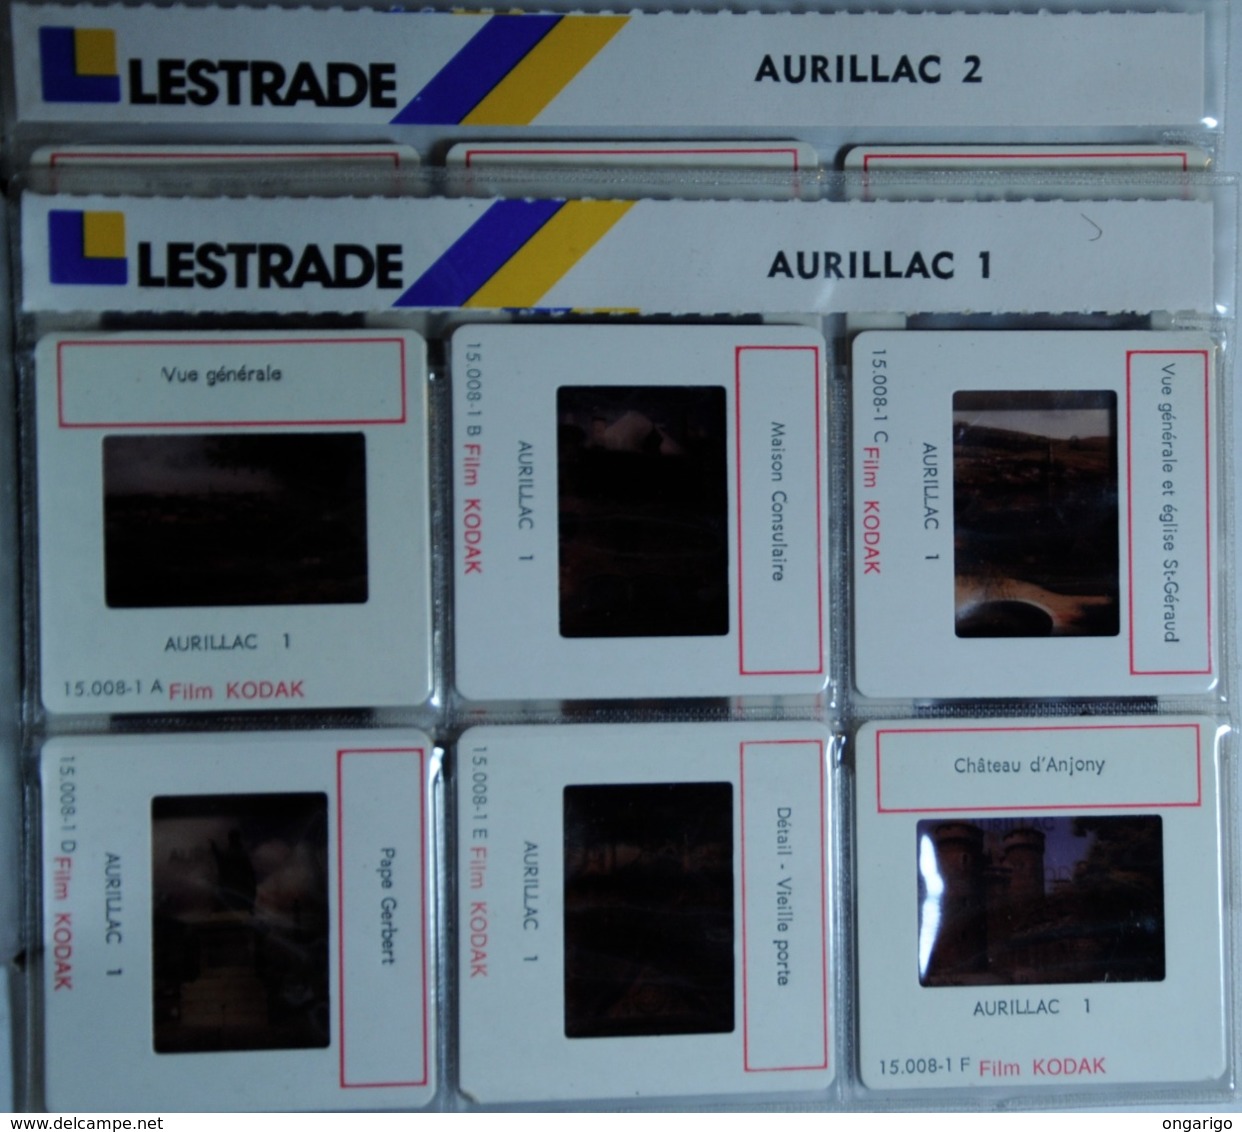 AURILLAC 1/2  :  12  DIAPOSITIVES LESTRADE SUR FILM KODAK - Diapositives